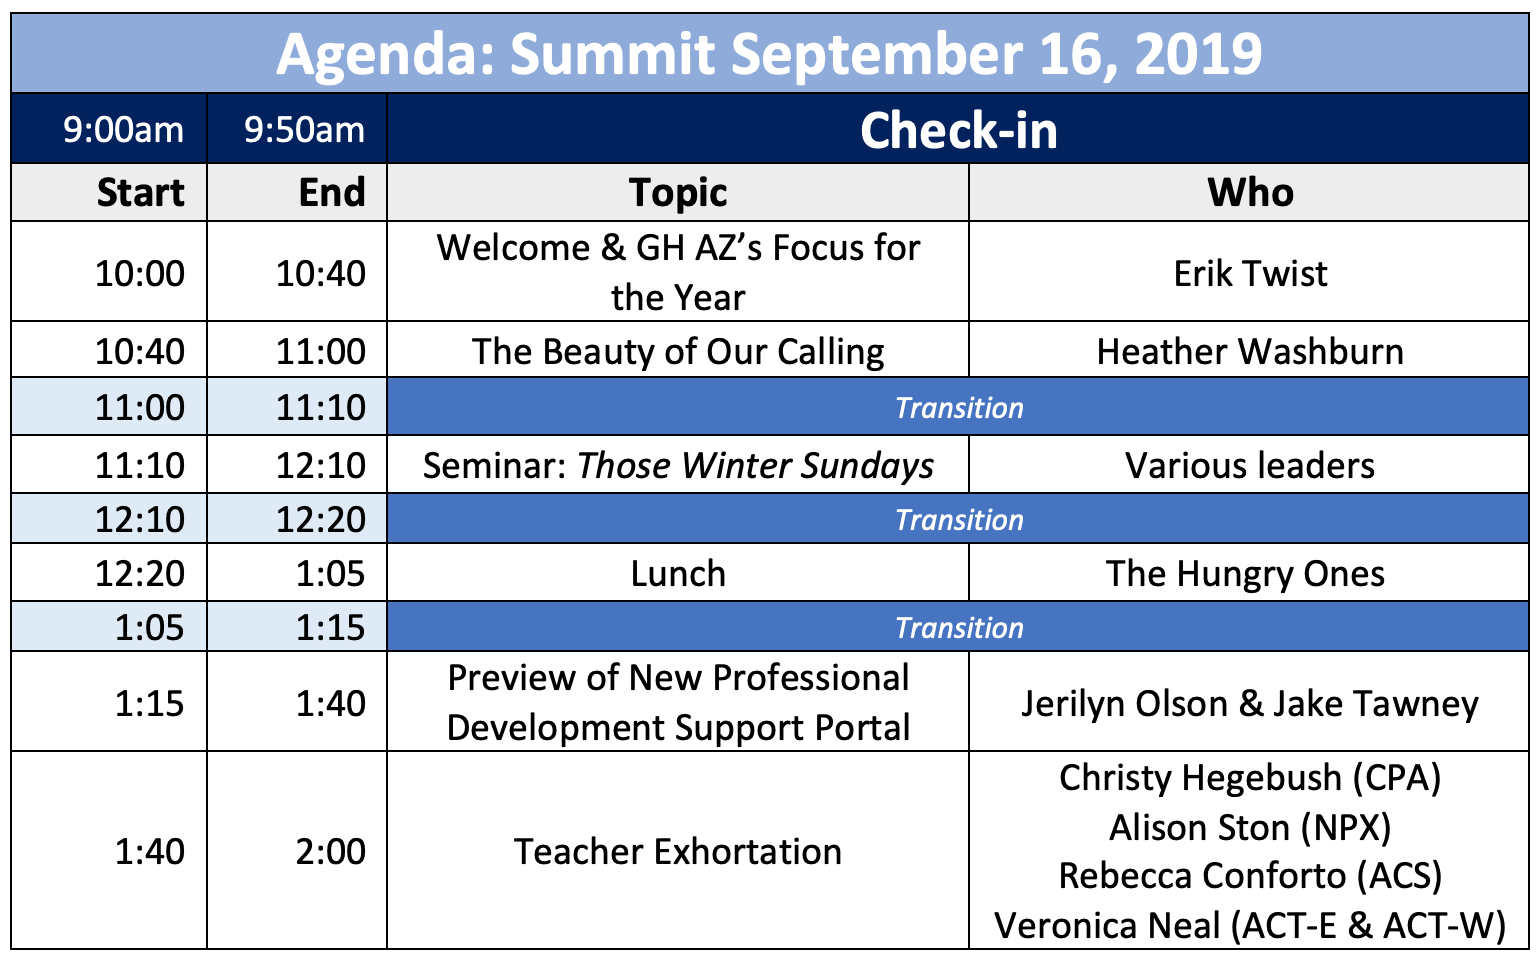 Summit Agenda